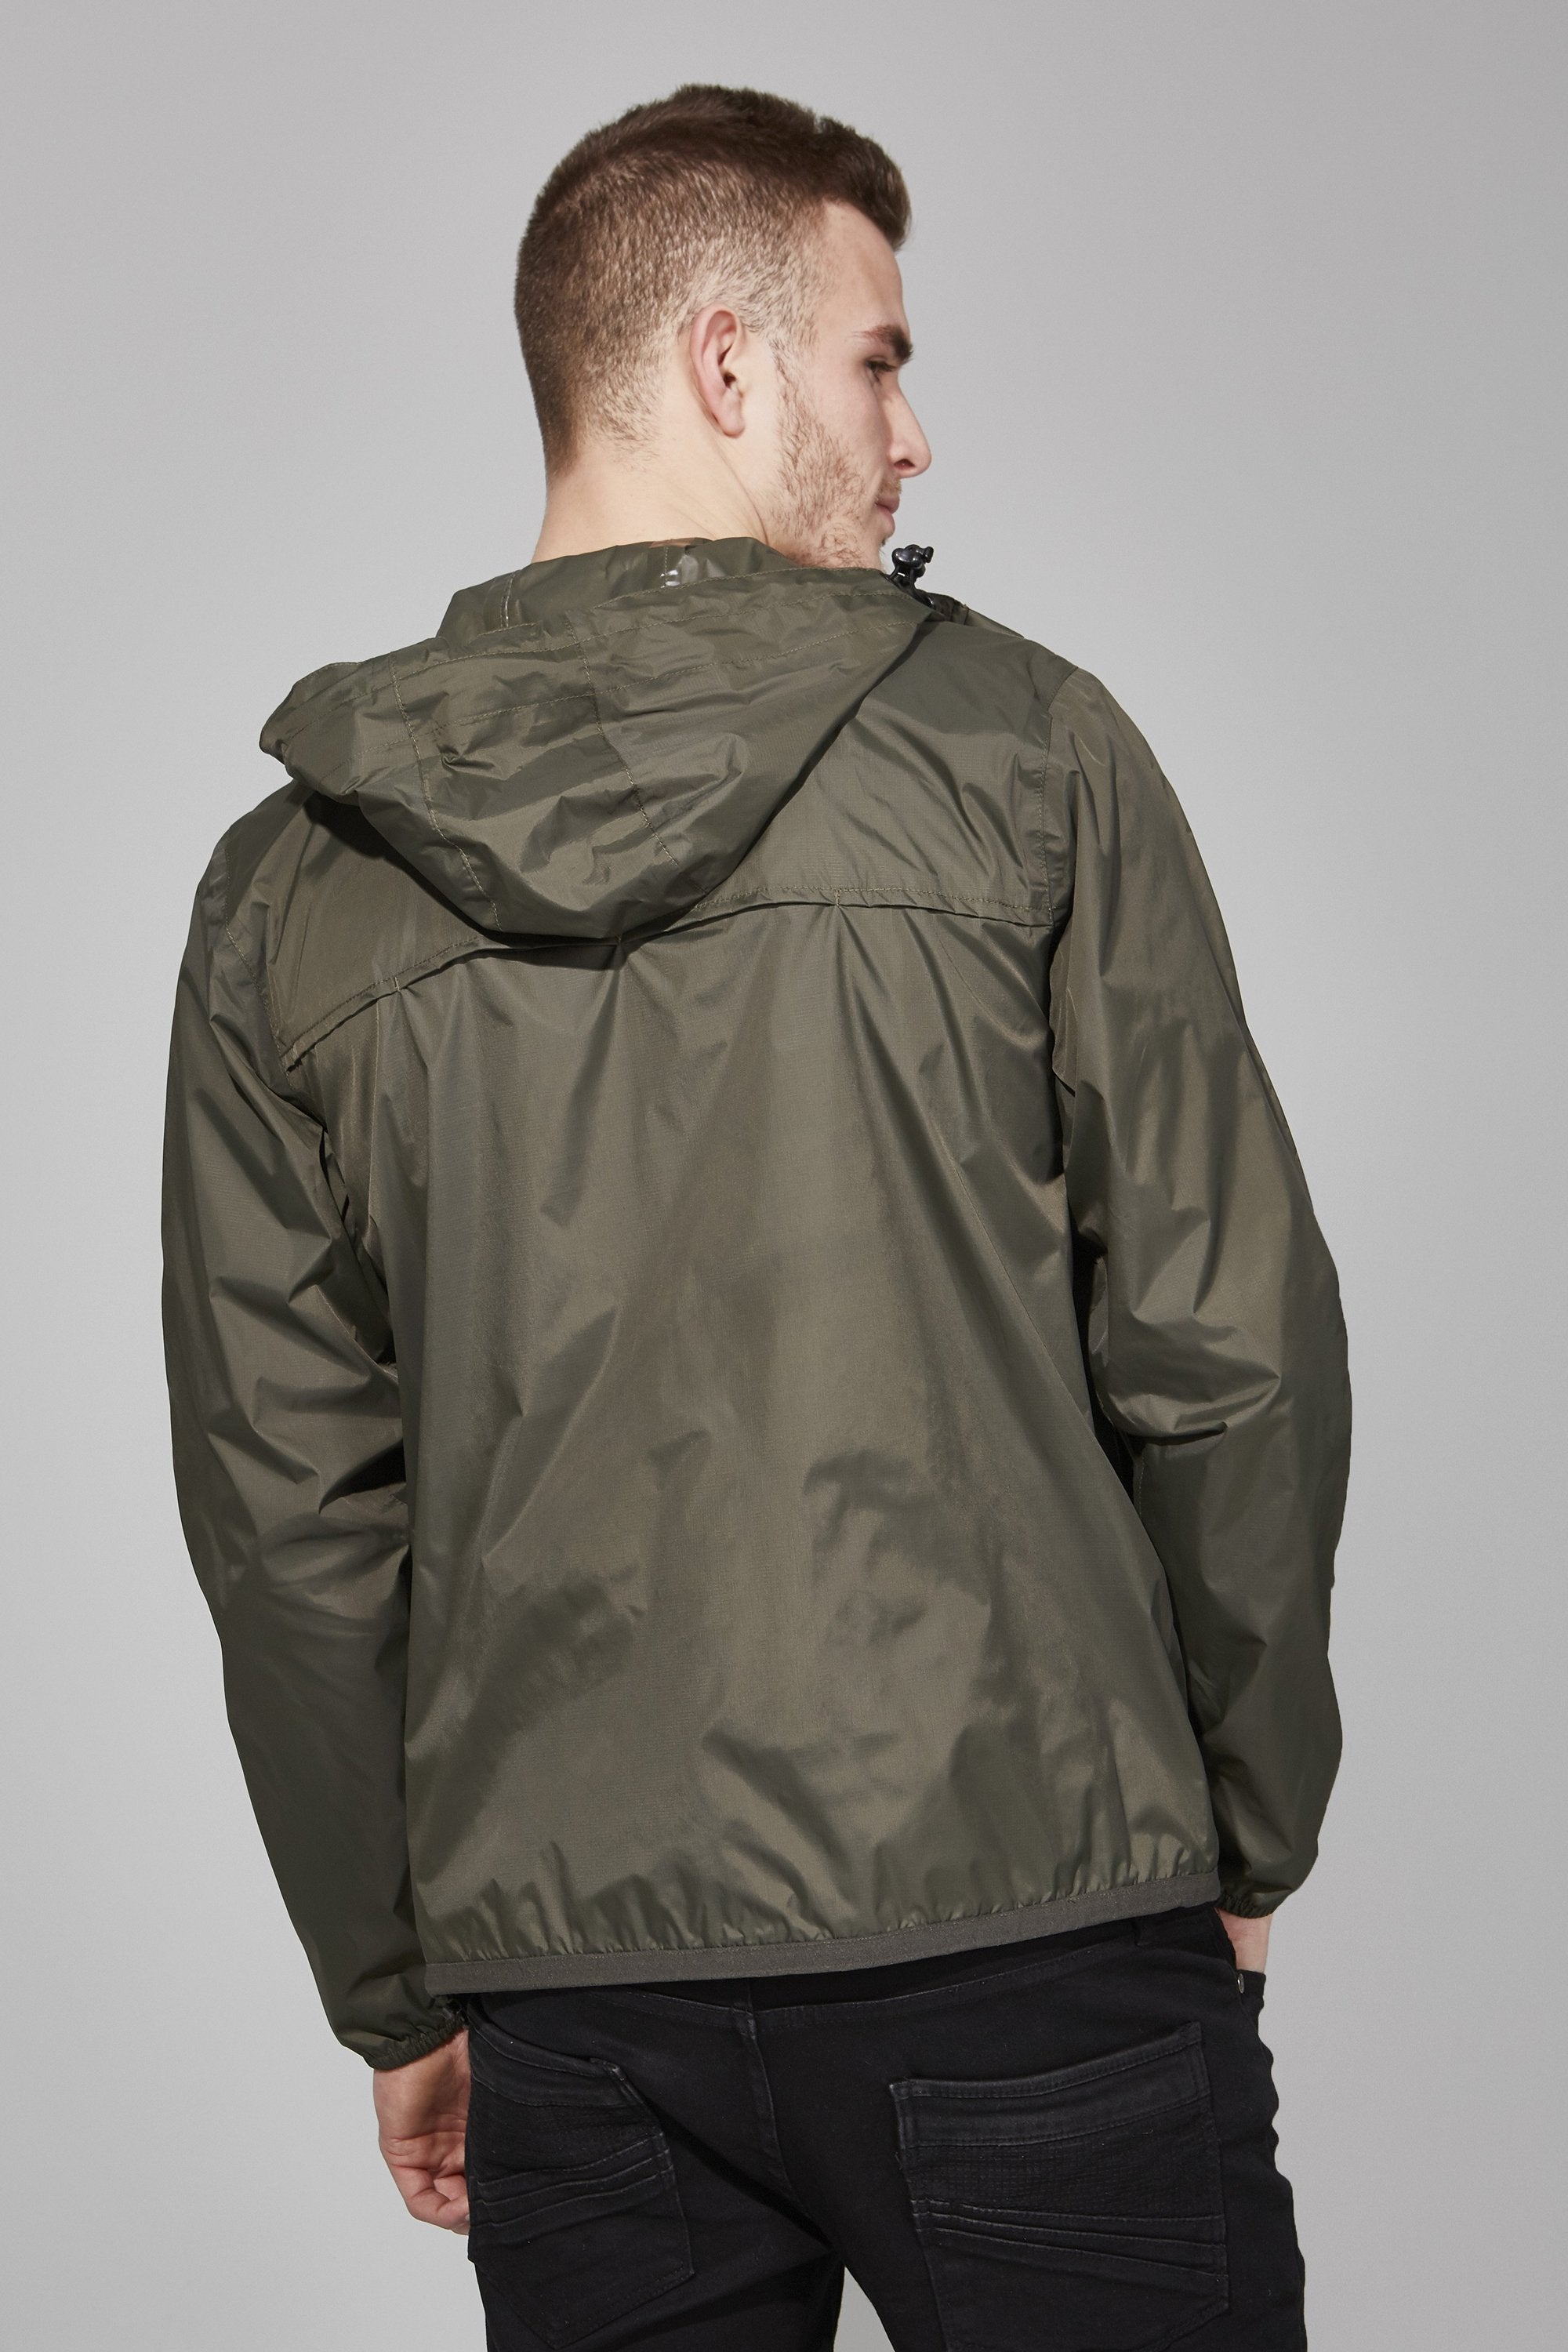 Picture of a Men's Full Zip Olive Green Waterproof Rain Jacket back view